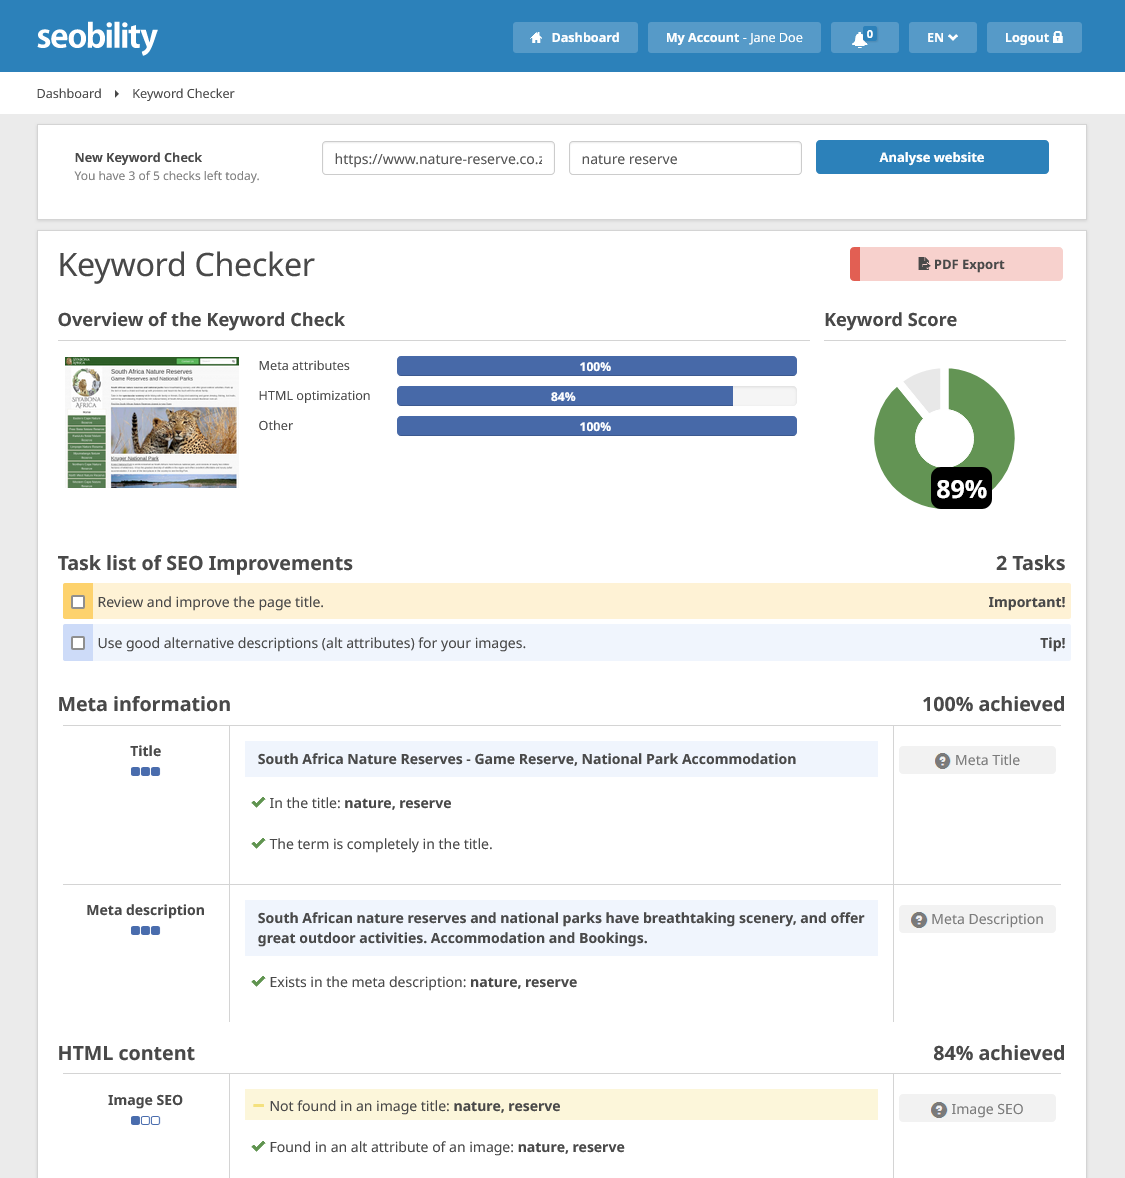 Keyword Checker from Seobility